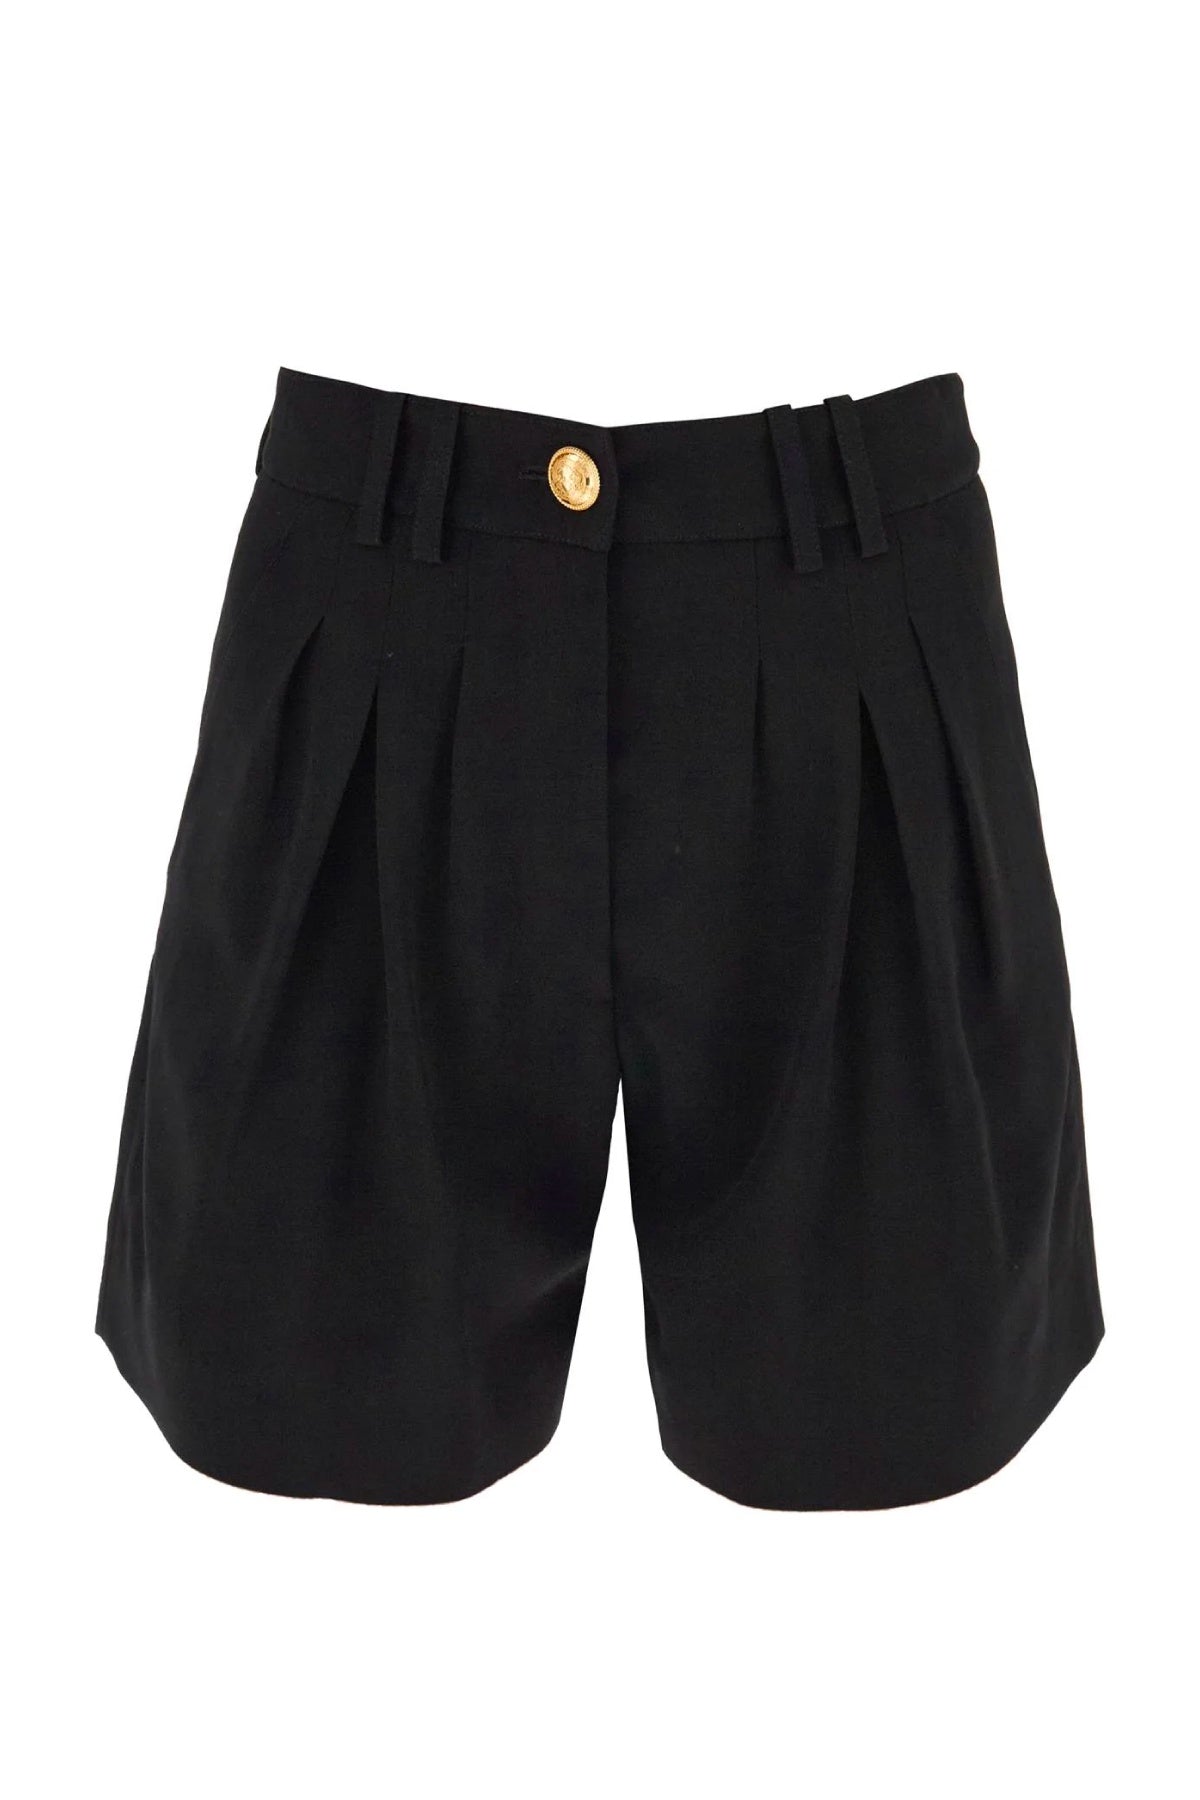 Balmain Crepe Shorts - Black